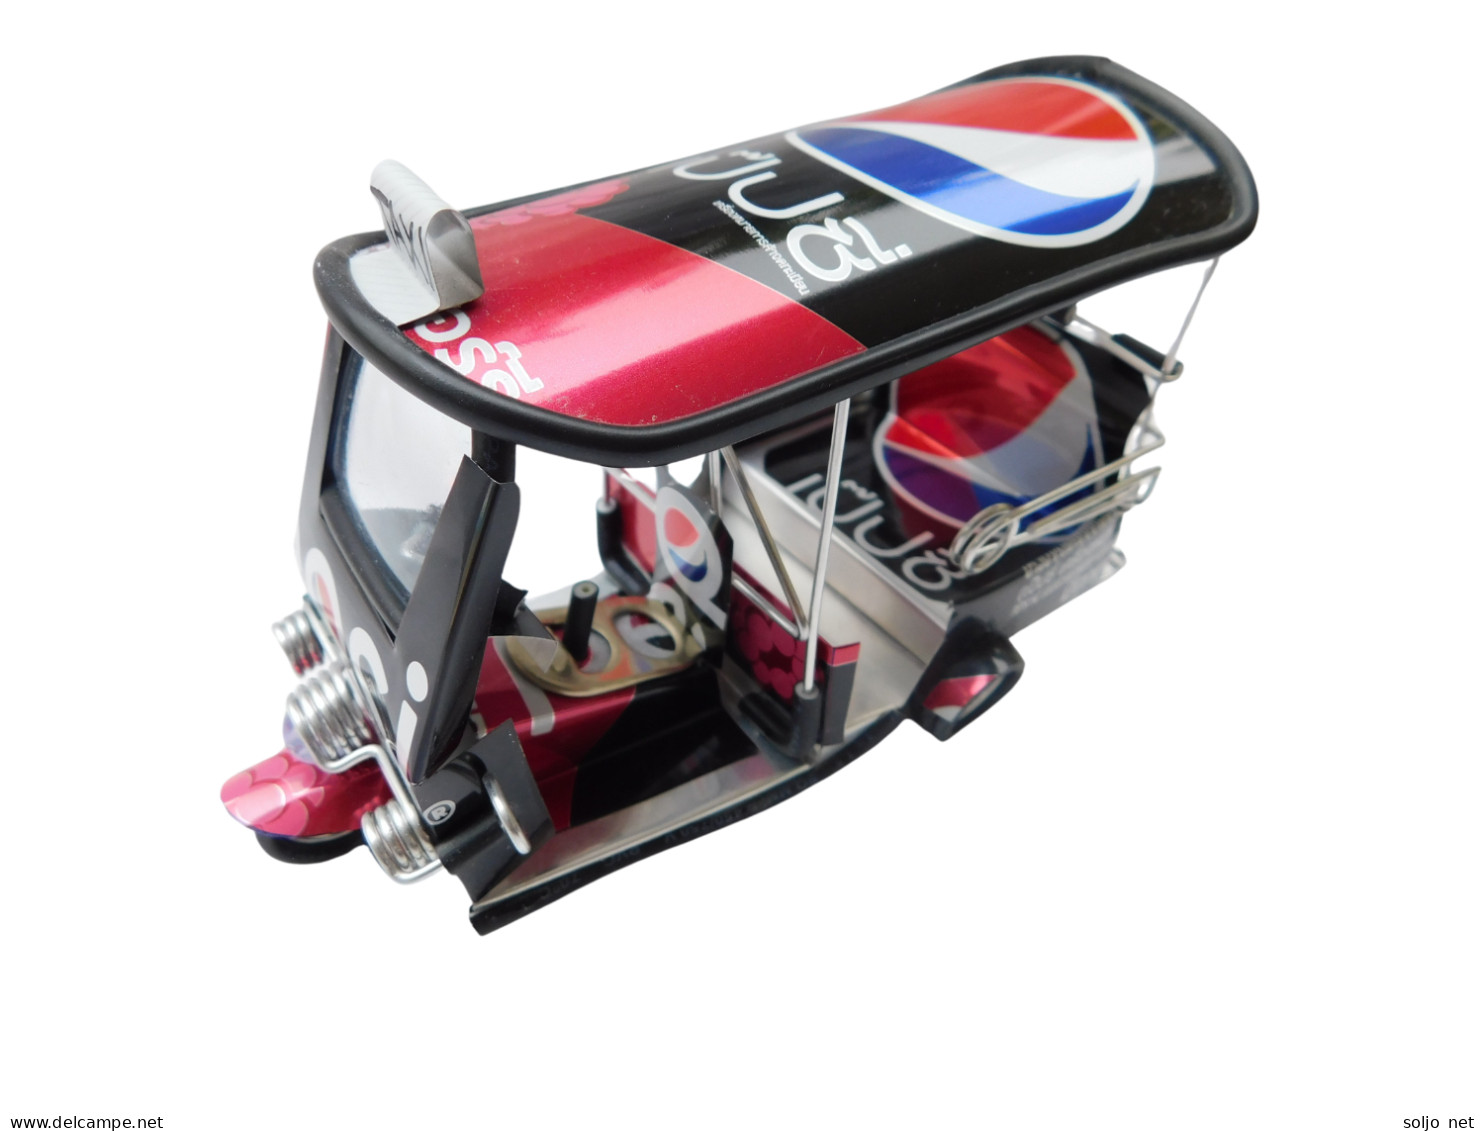 *** Pepsi Dark *** Detailgetreue Handgefertigte Nachbildung: TUK TUK Taxi Aus Thailand - 14x7x6 Cm - Motorcycles